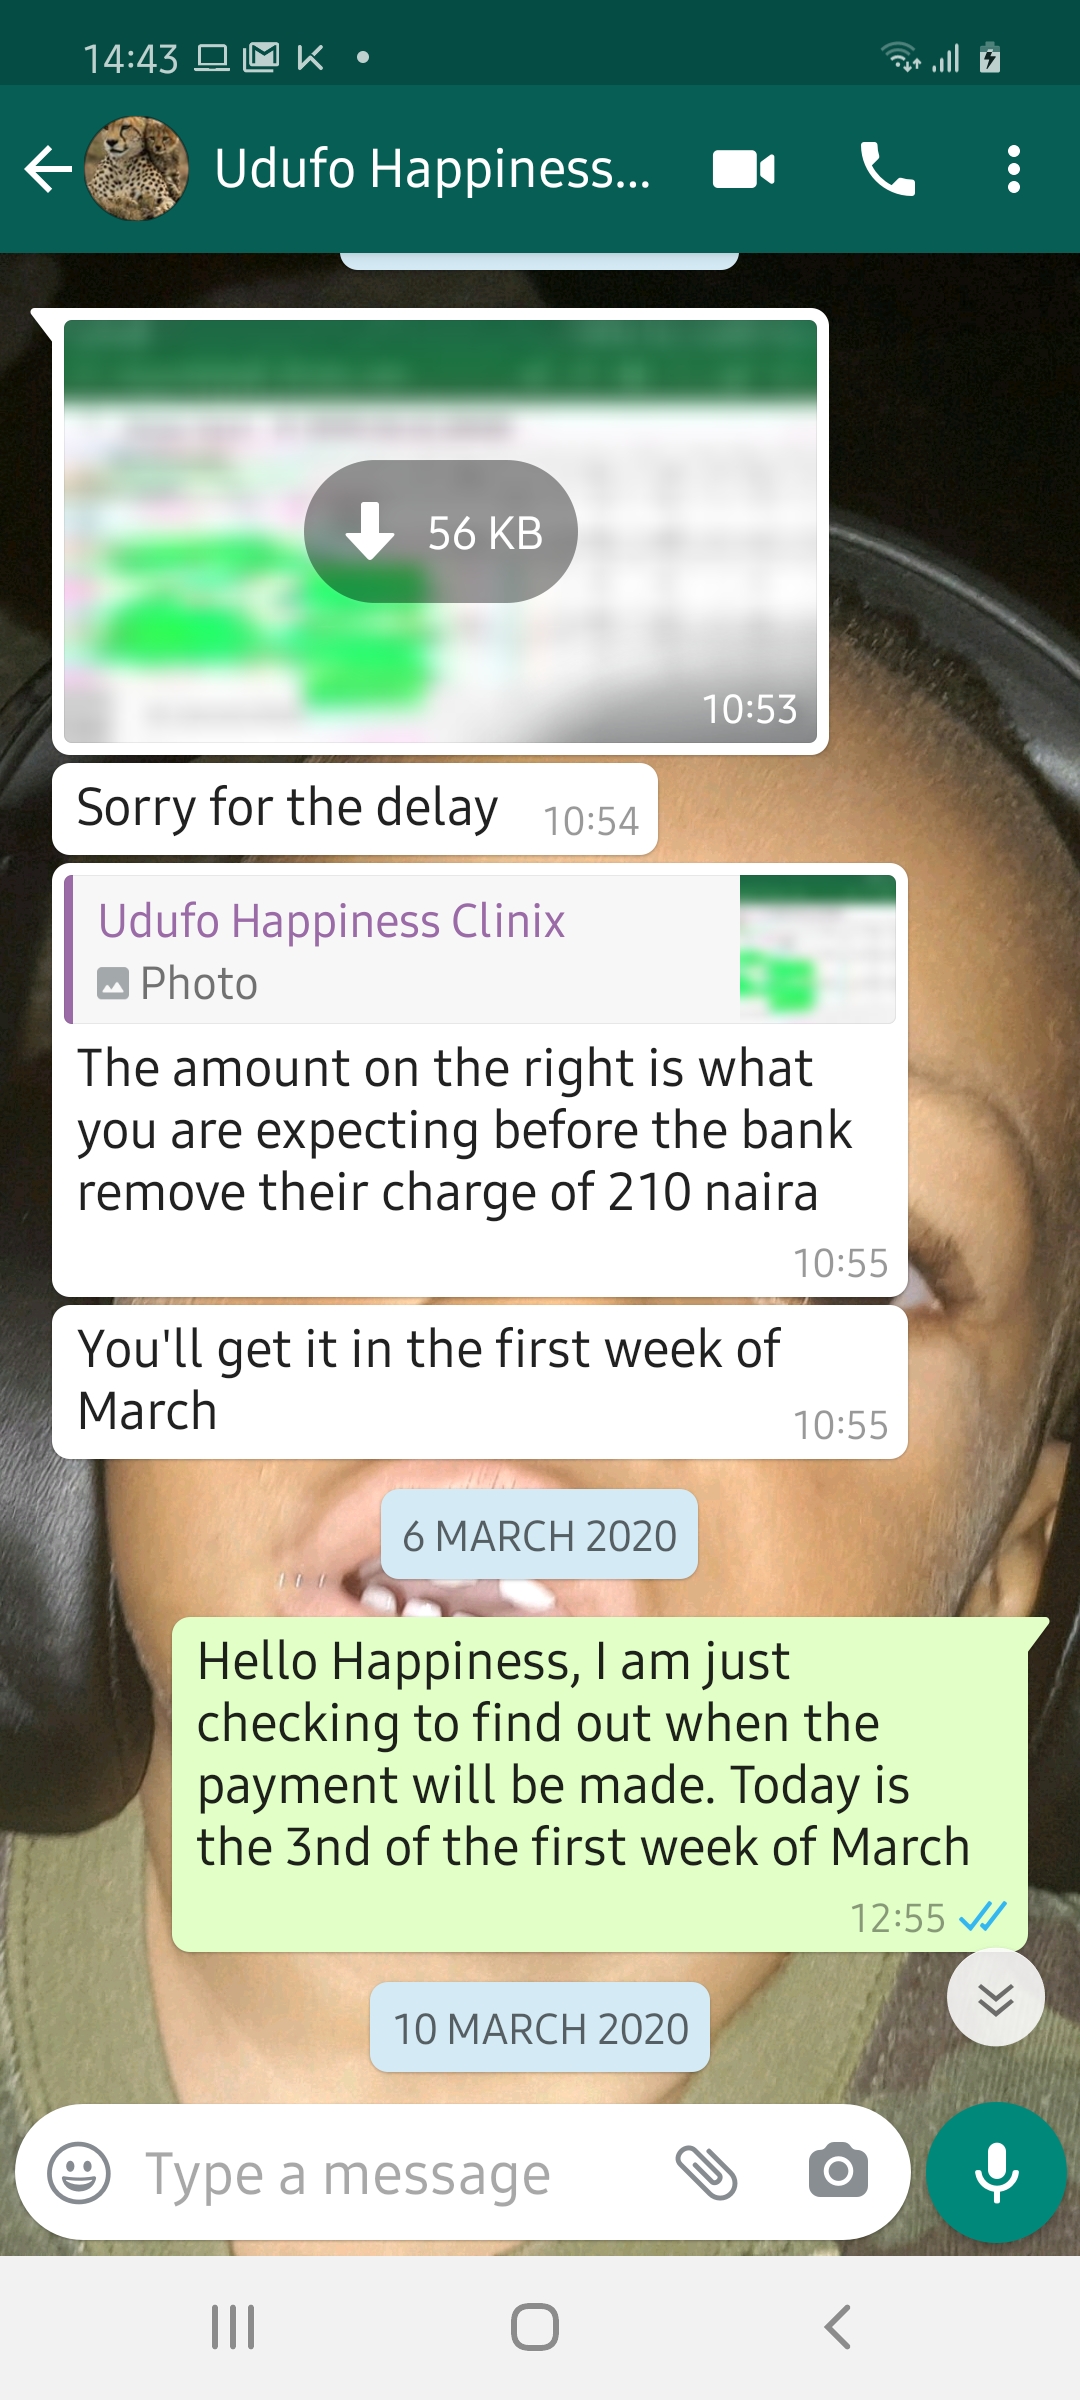 Screenshot of WhatsApp chat with Clinix sales representatives